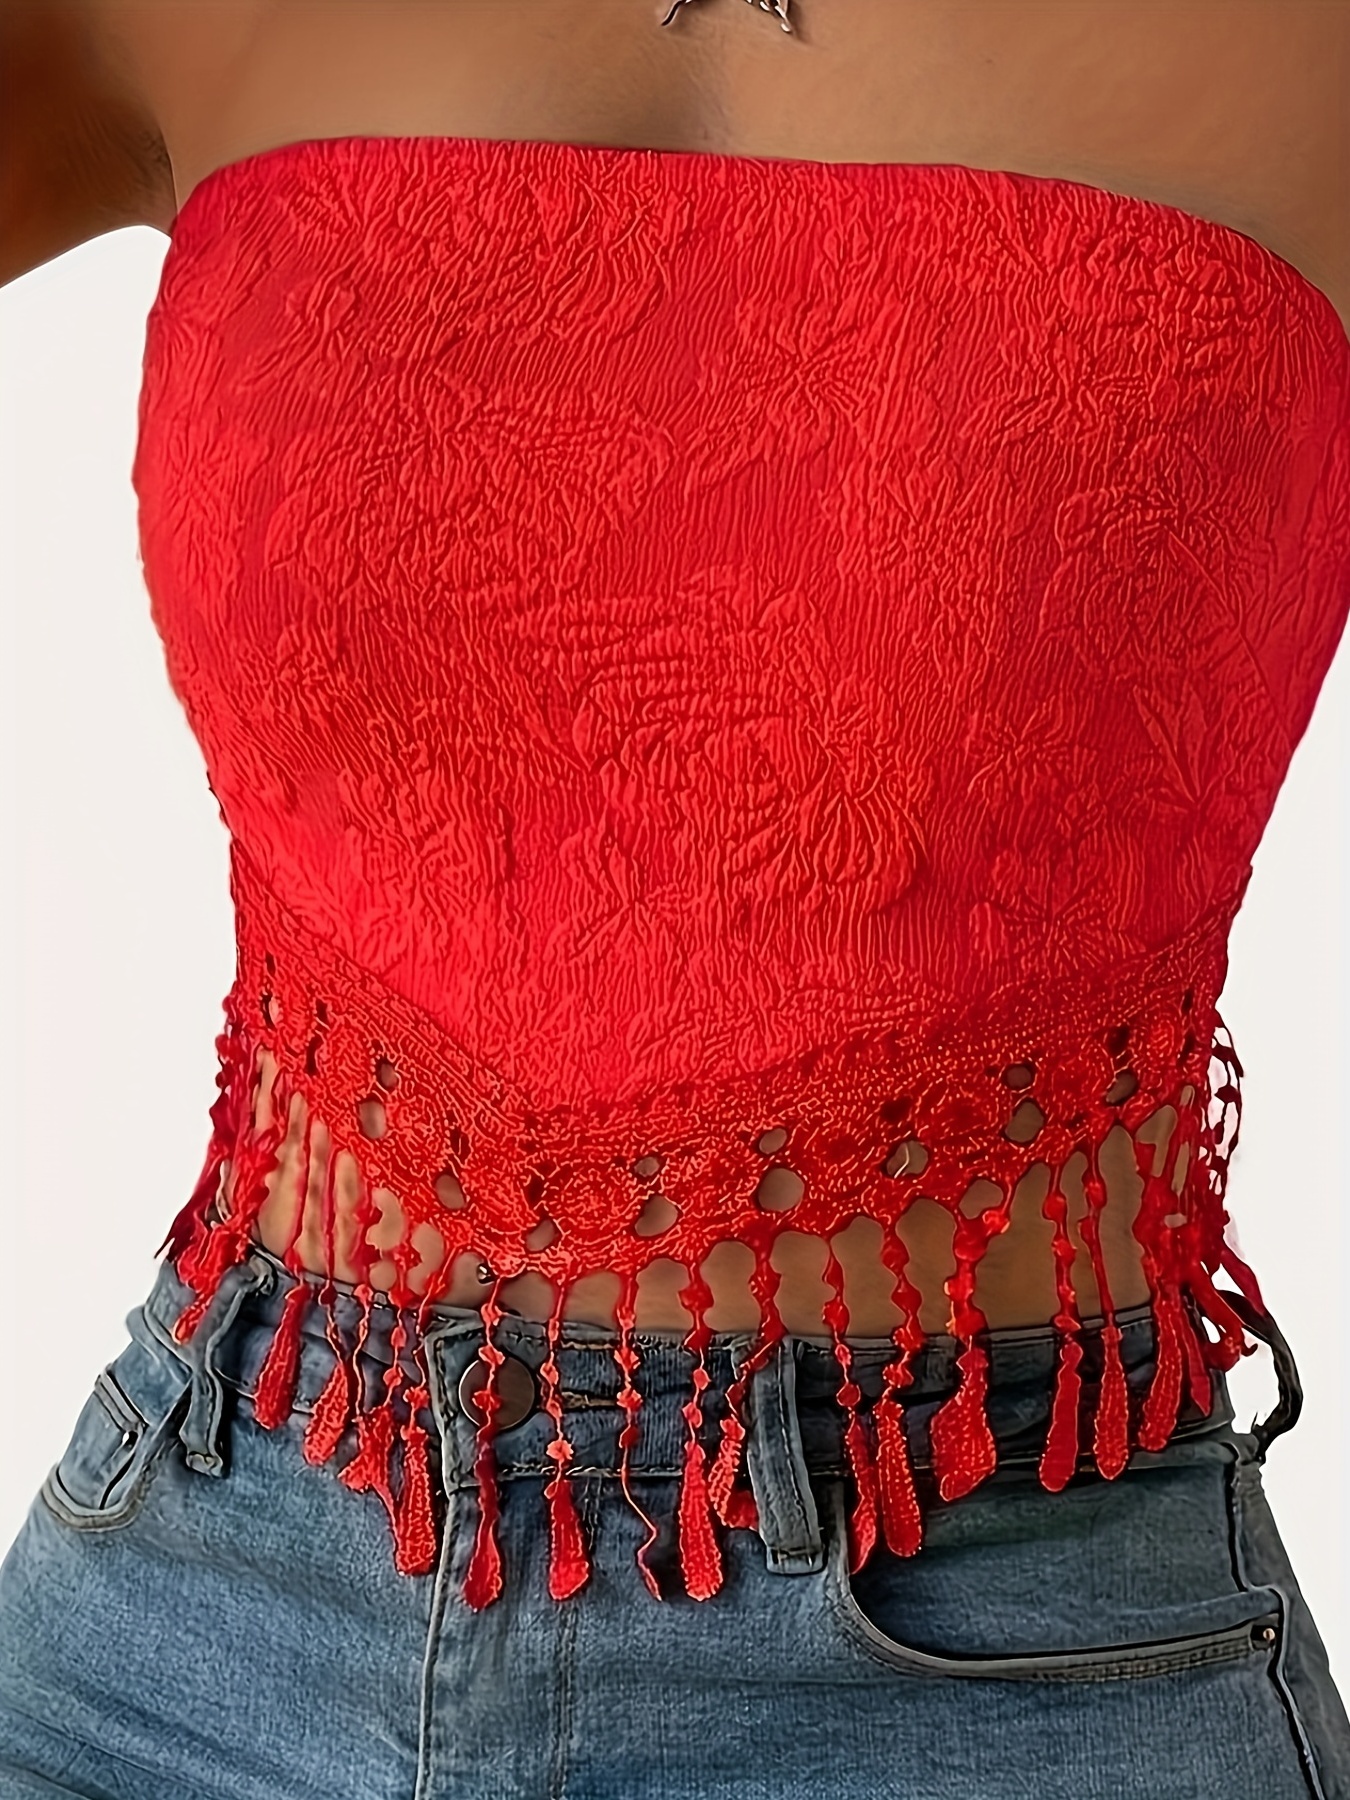 Women s Strapless Tube Tops Solid Color Crochet Jacquard Fringed